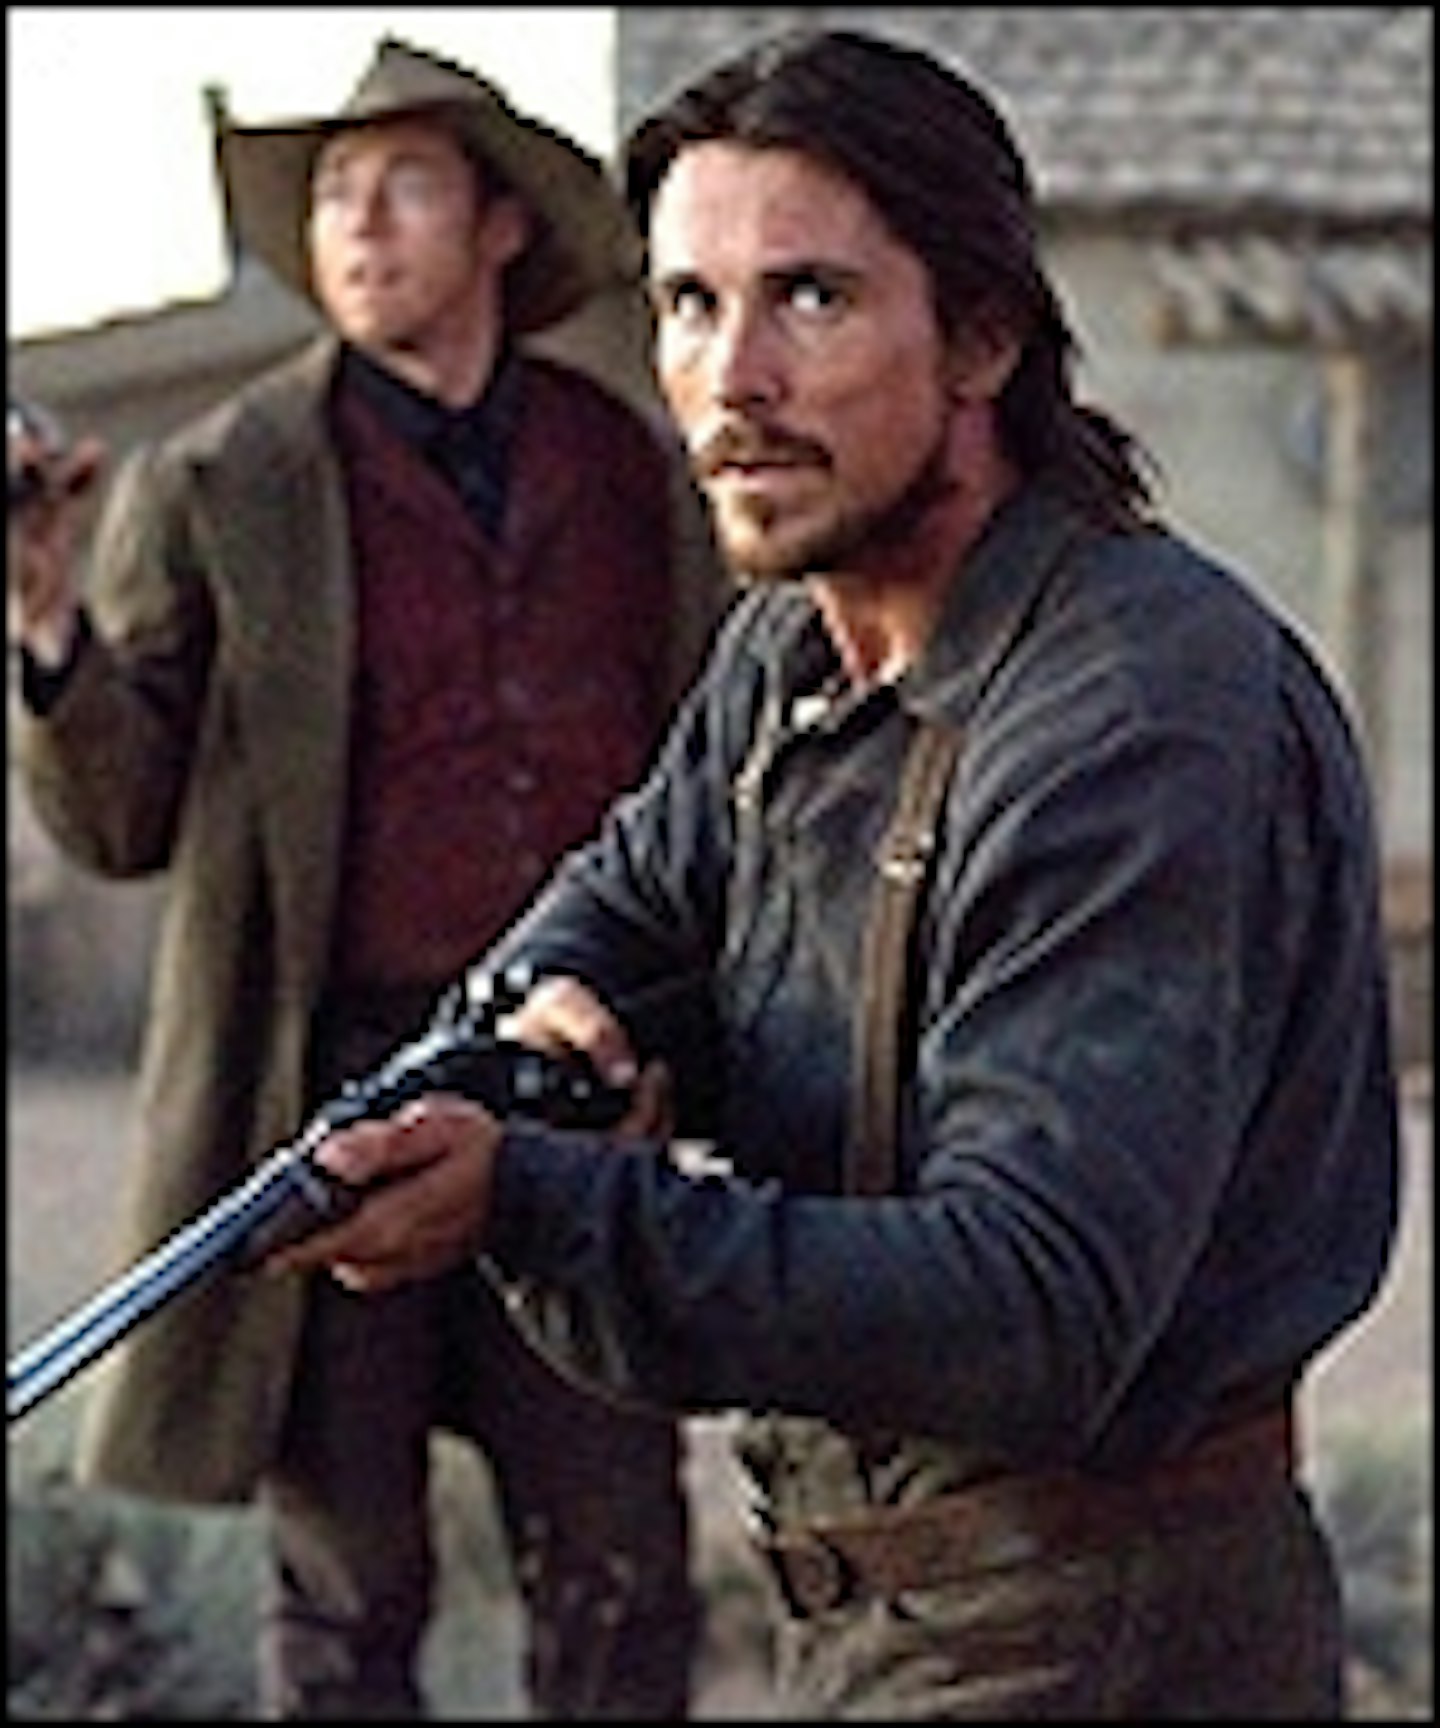 Christian Bale Adopts Creed Of Violence